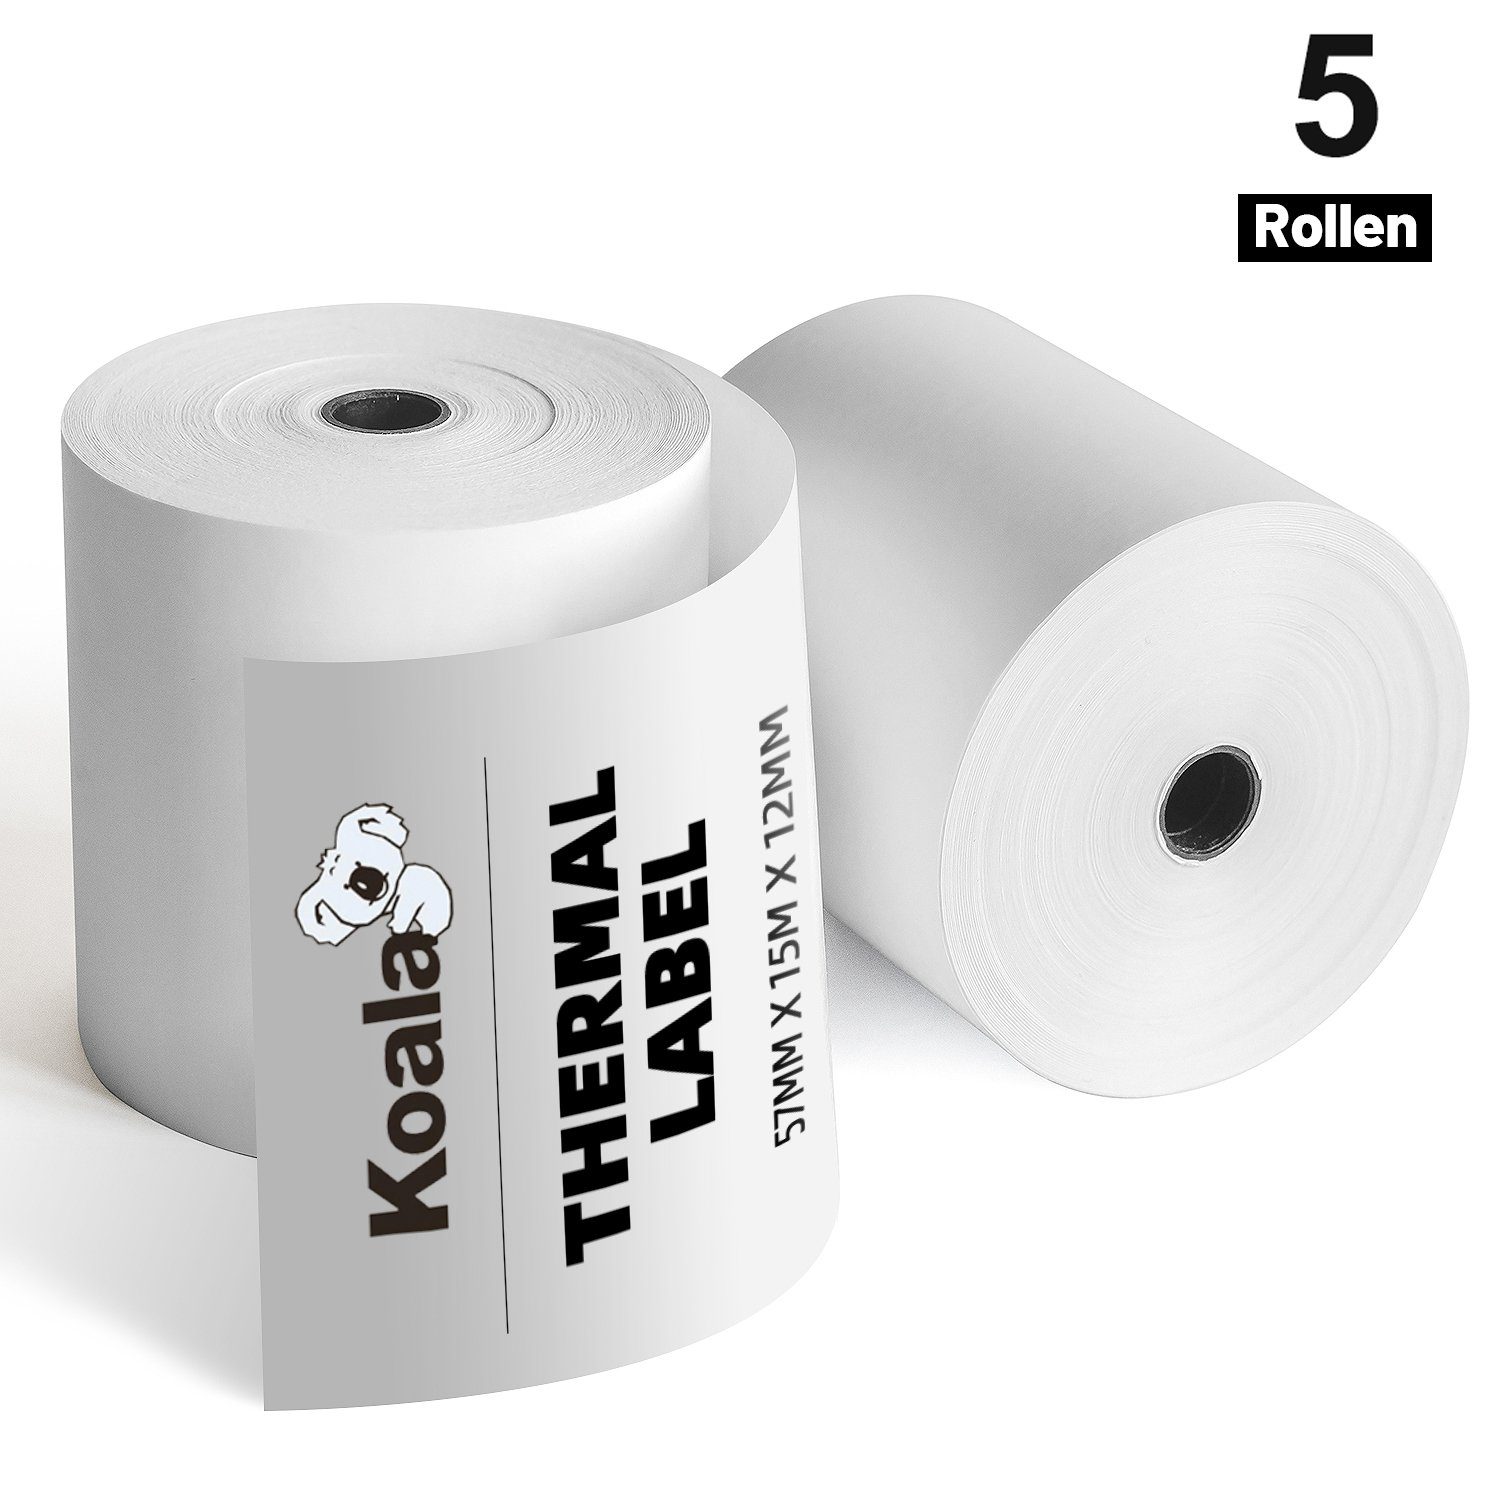 Koala Etikettenpapier 5 Rollen 57 x 15 mm Thermopapier Bonrolle für Kassen, Drucker